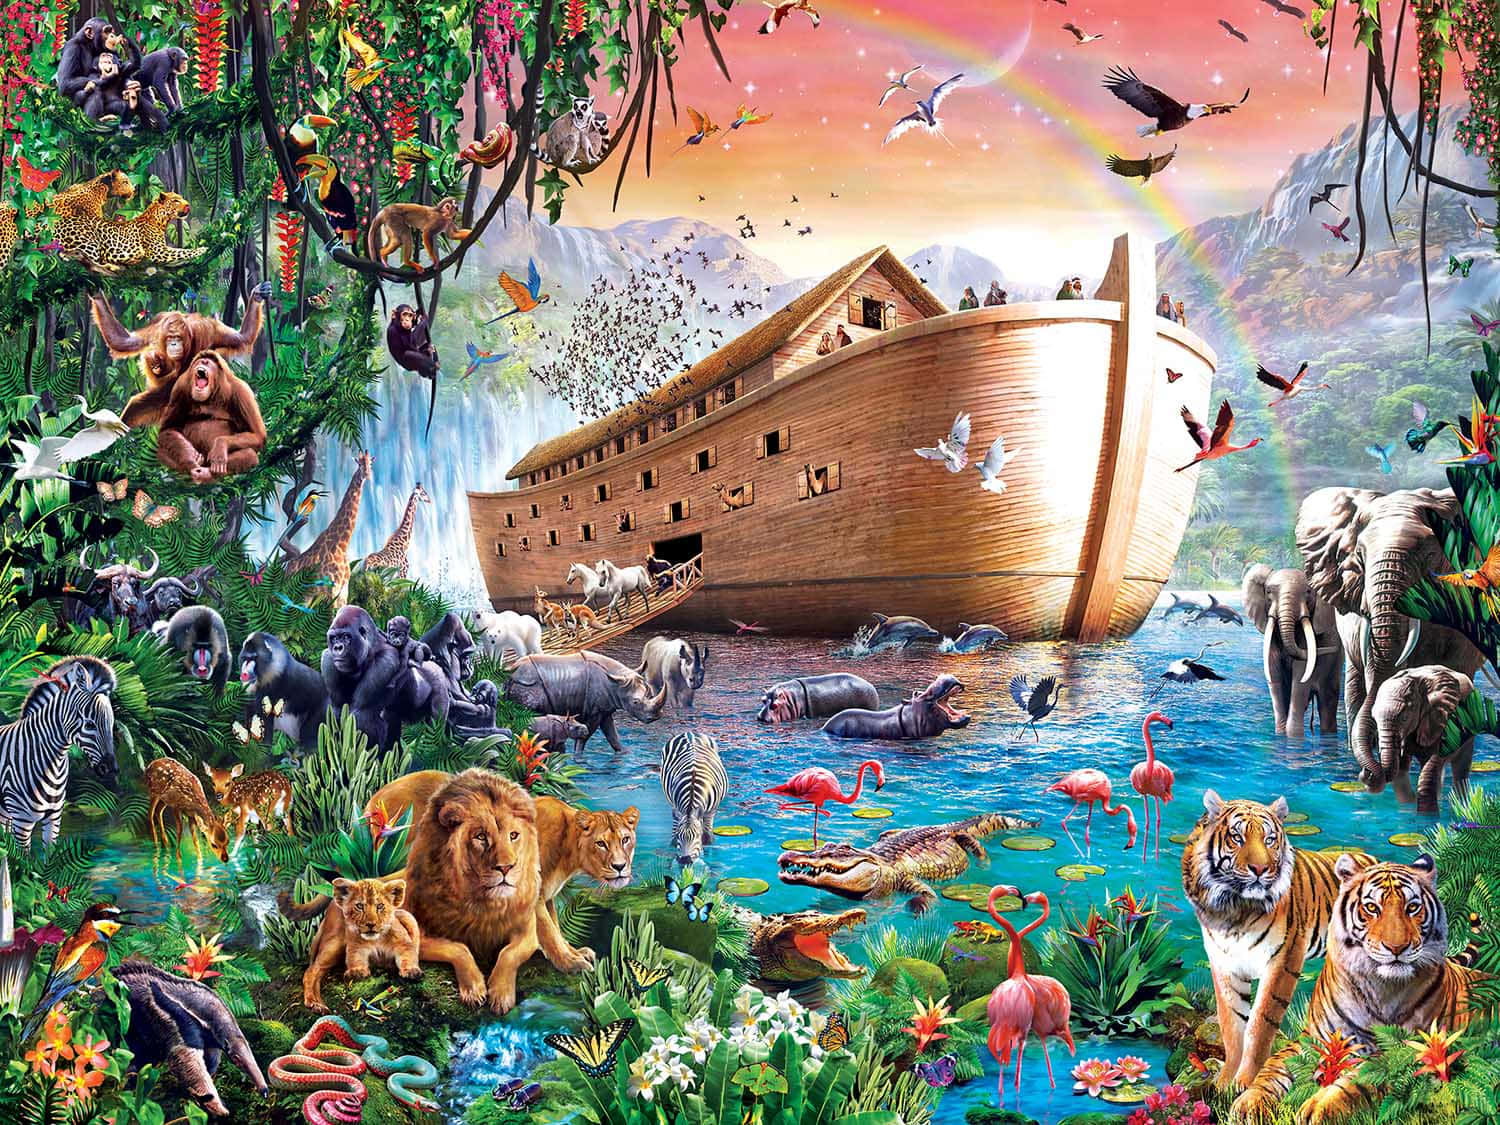 "Noah's Ark Ready To Sail Into The Stormy Seas"